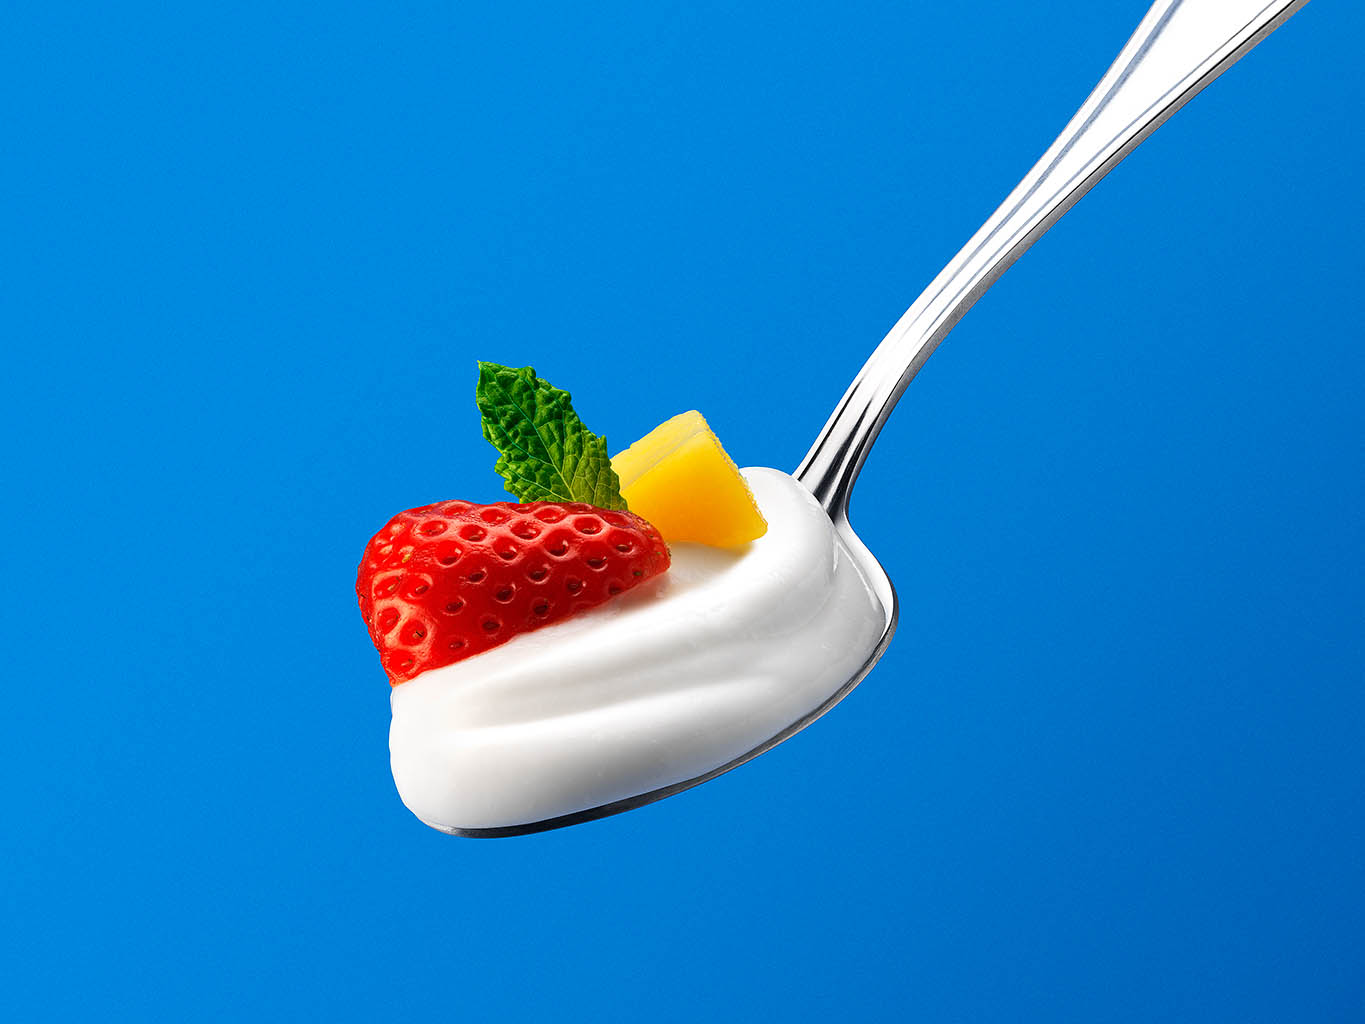 Packshot Factory - Snack - Koko yoghurt on a spoon with fruits